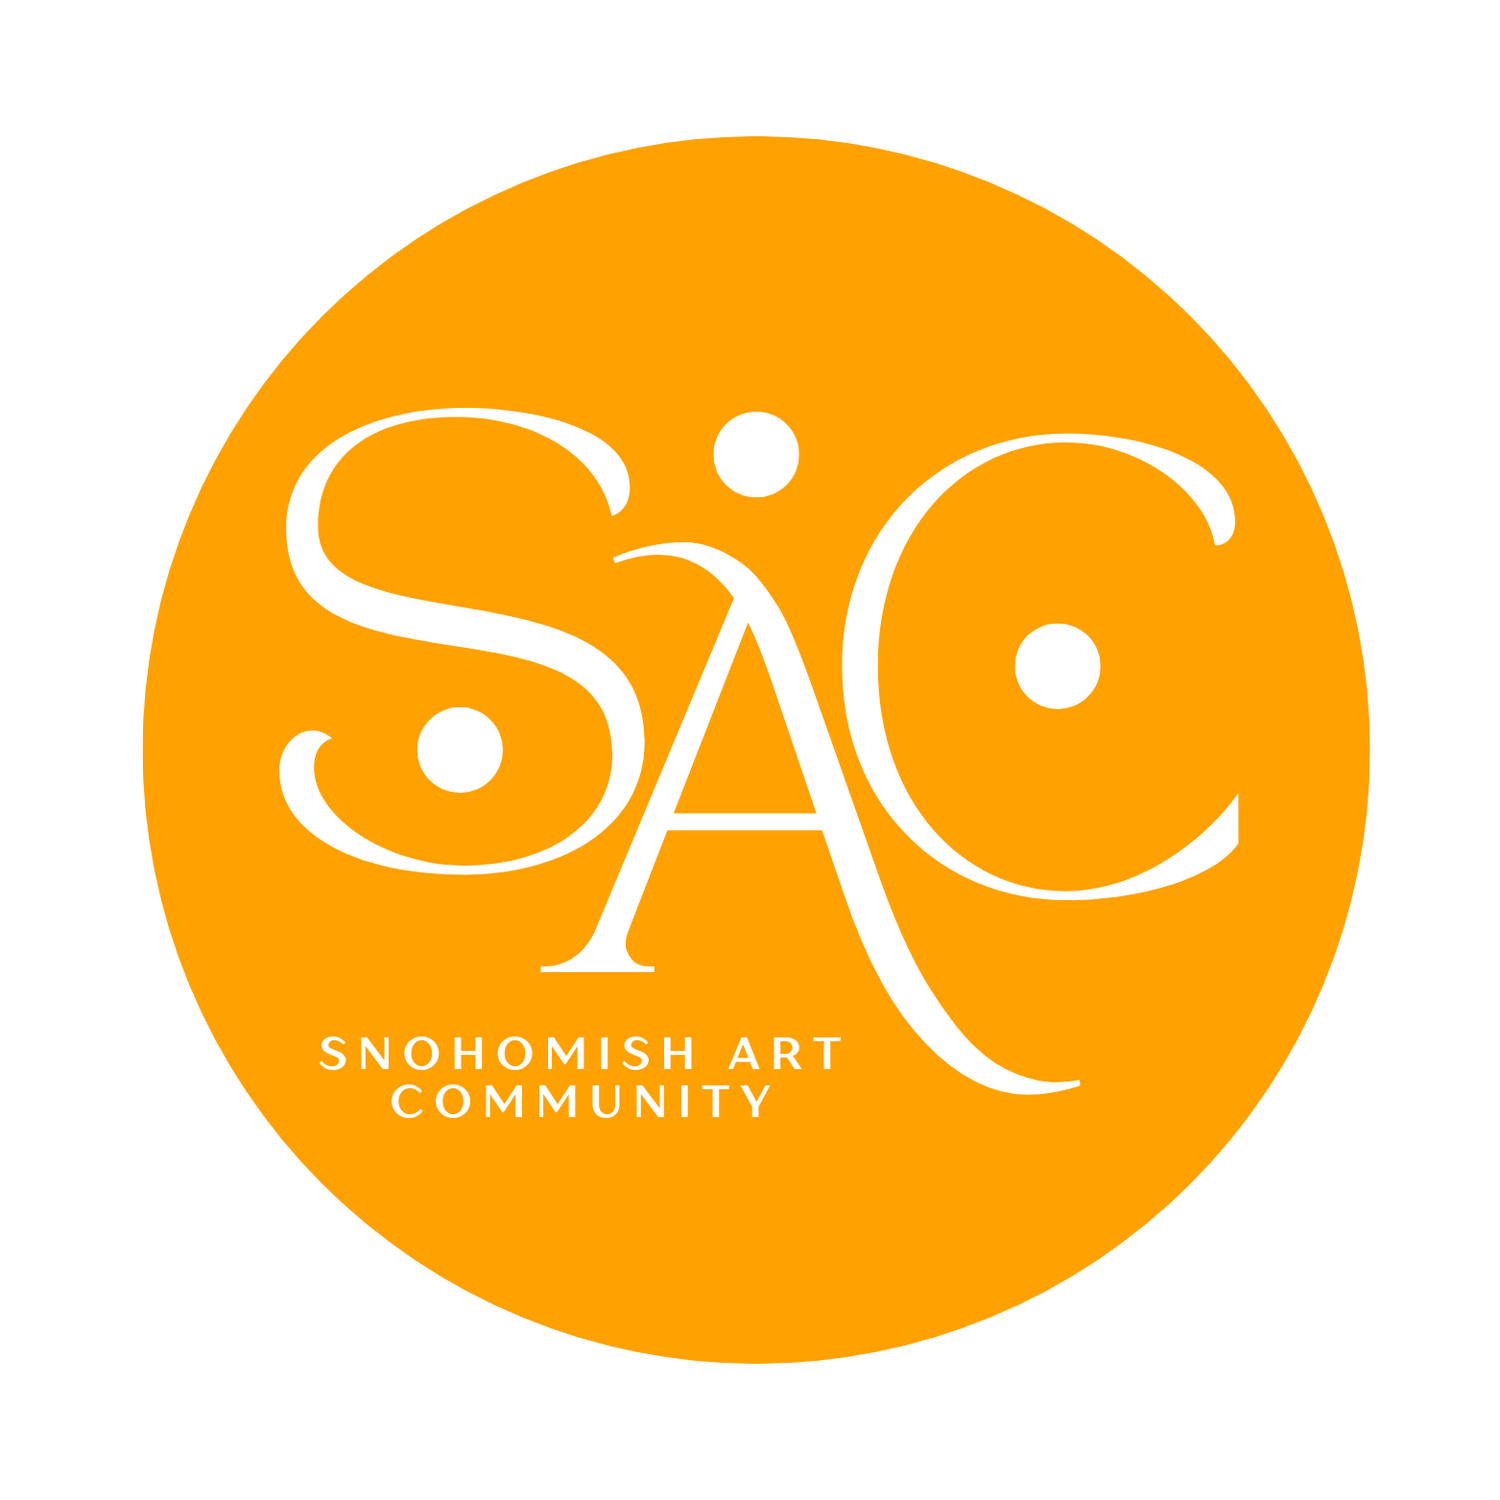 Snohomish Art Community